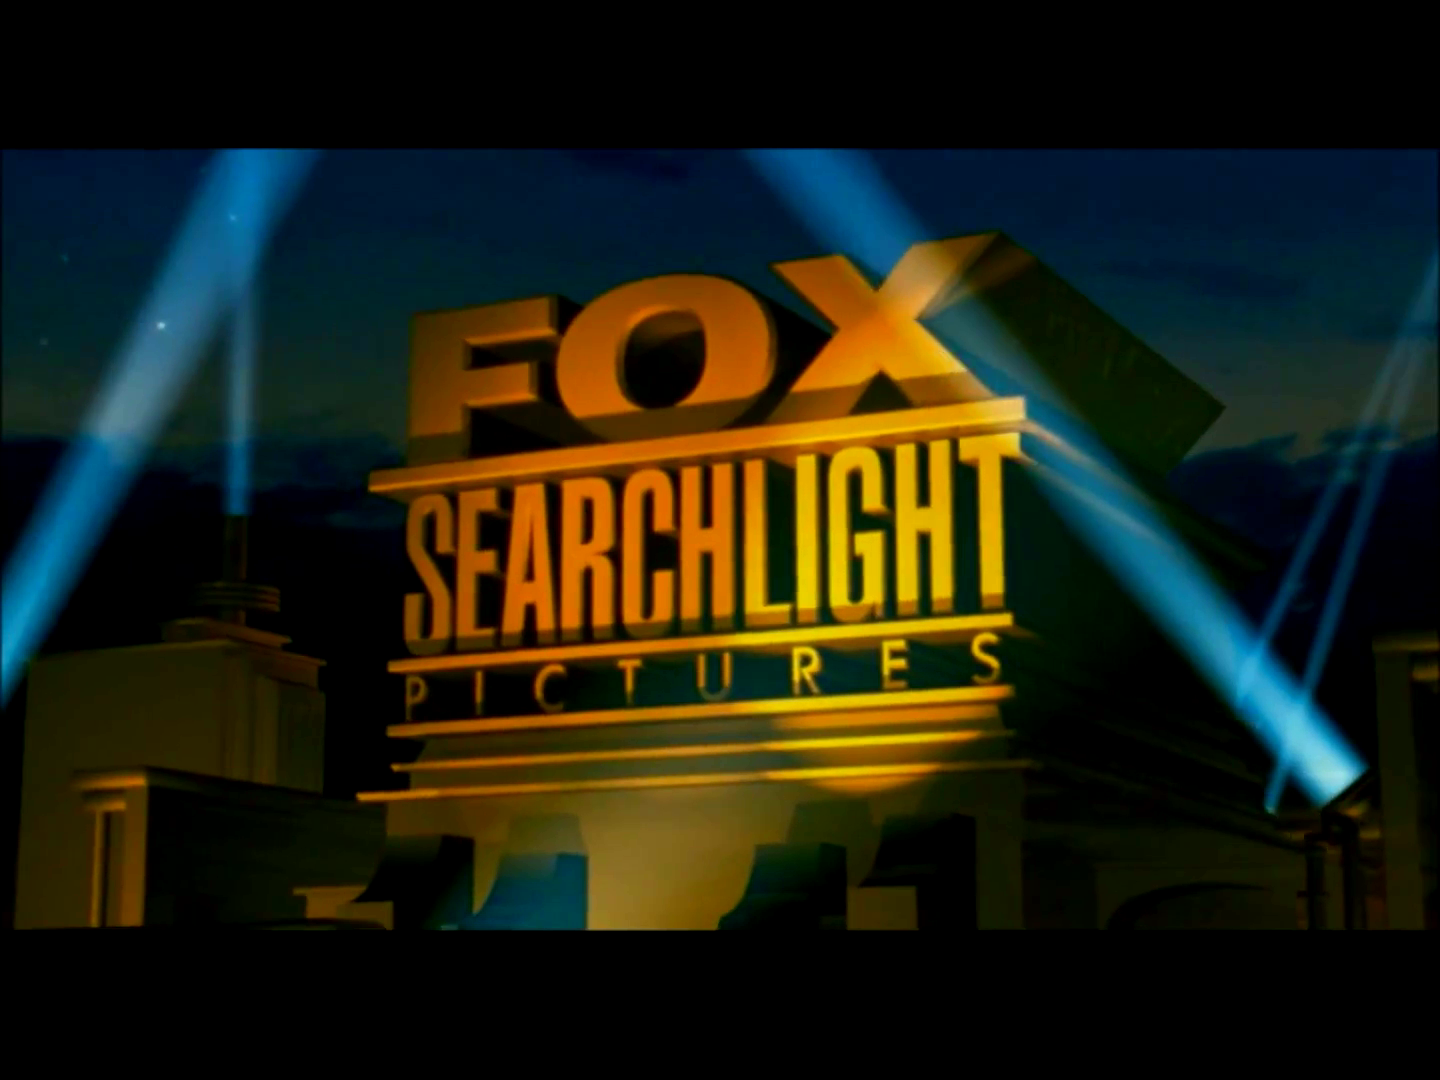 Talkfox Searchlight Pictures Logopedia Fandom